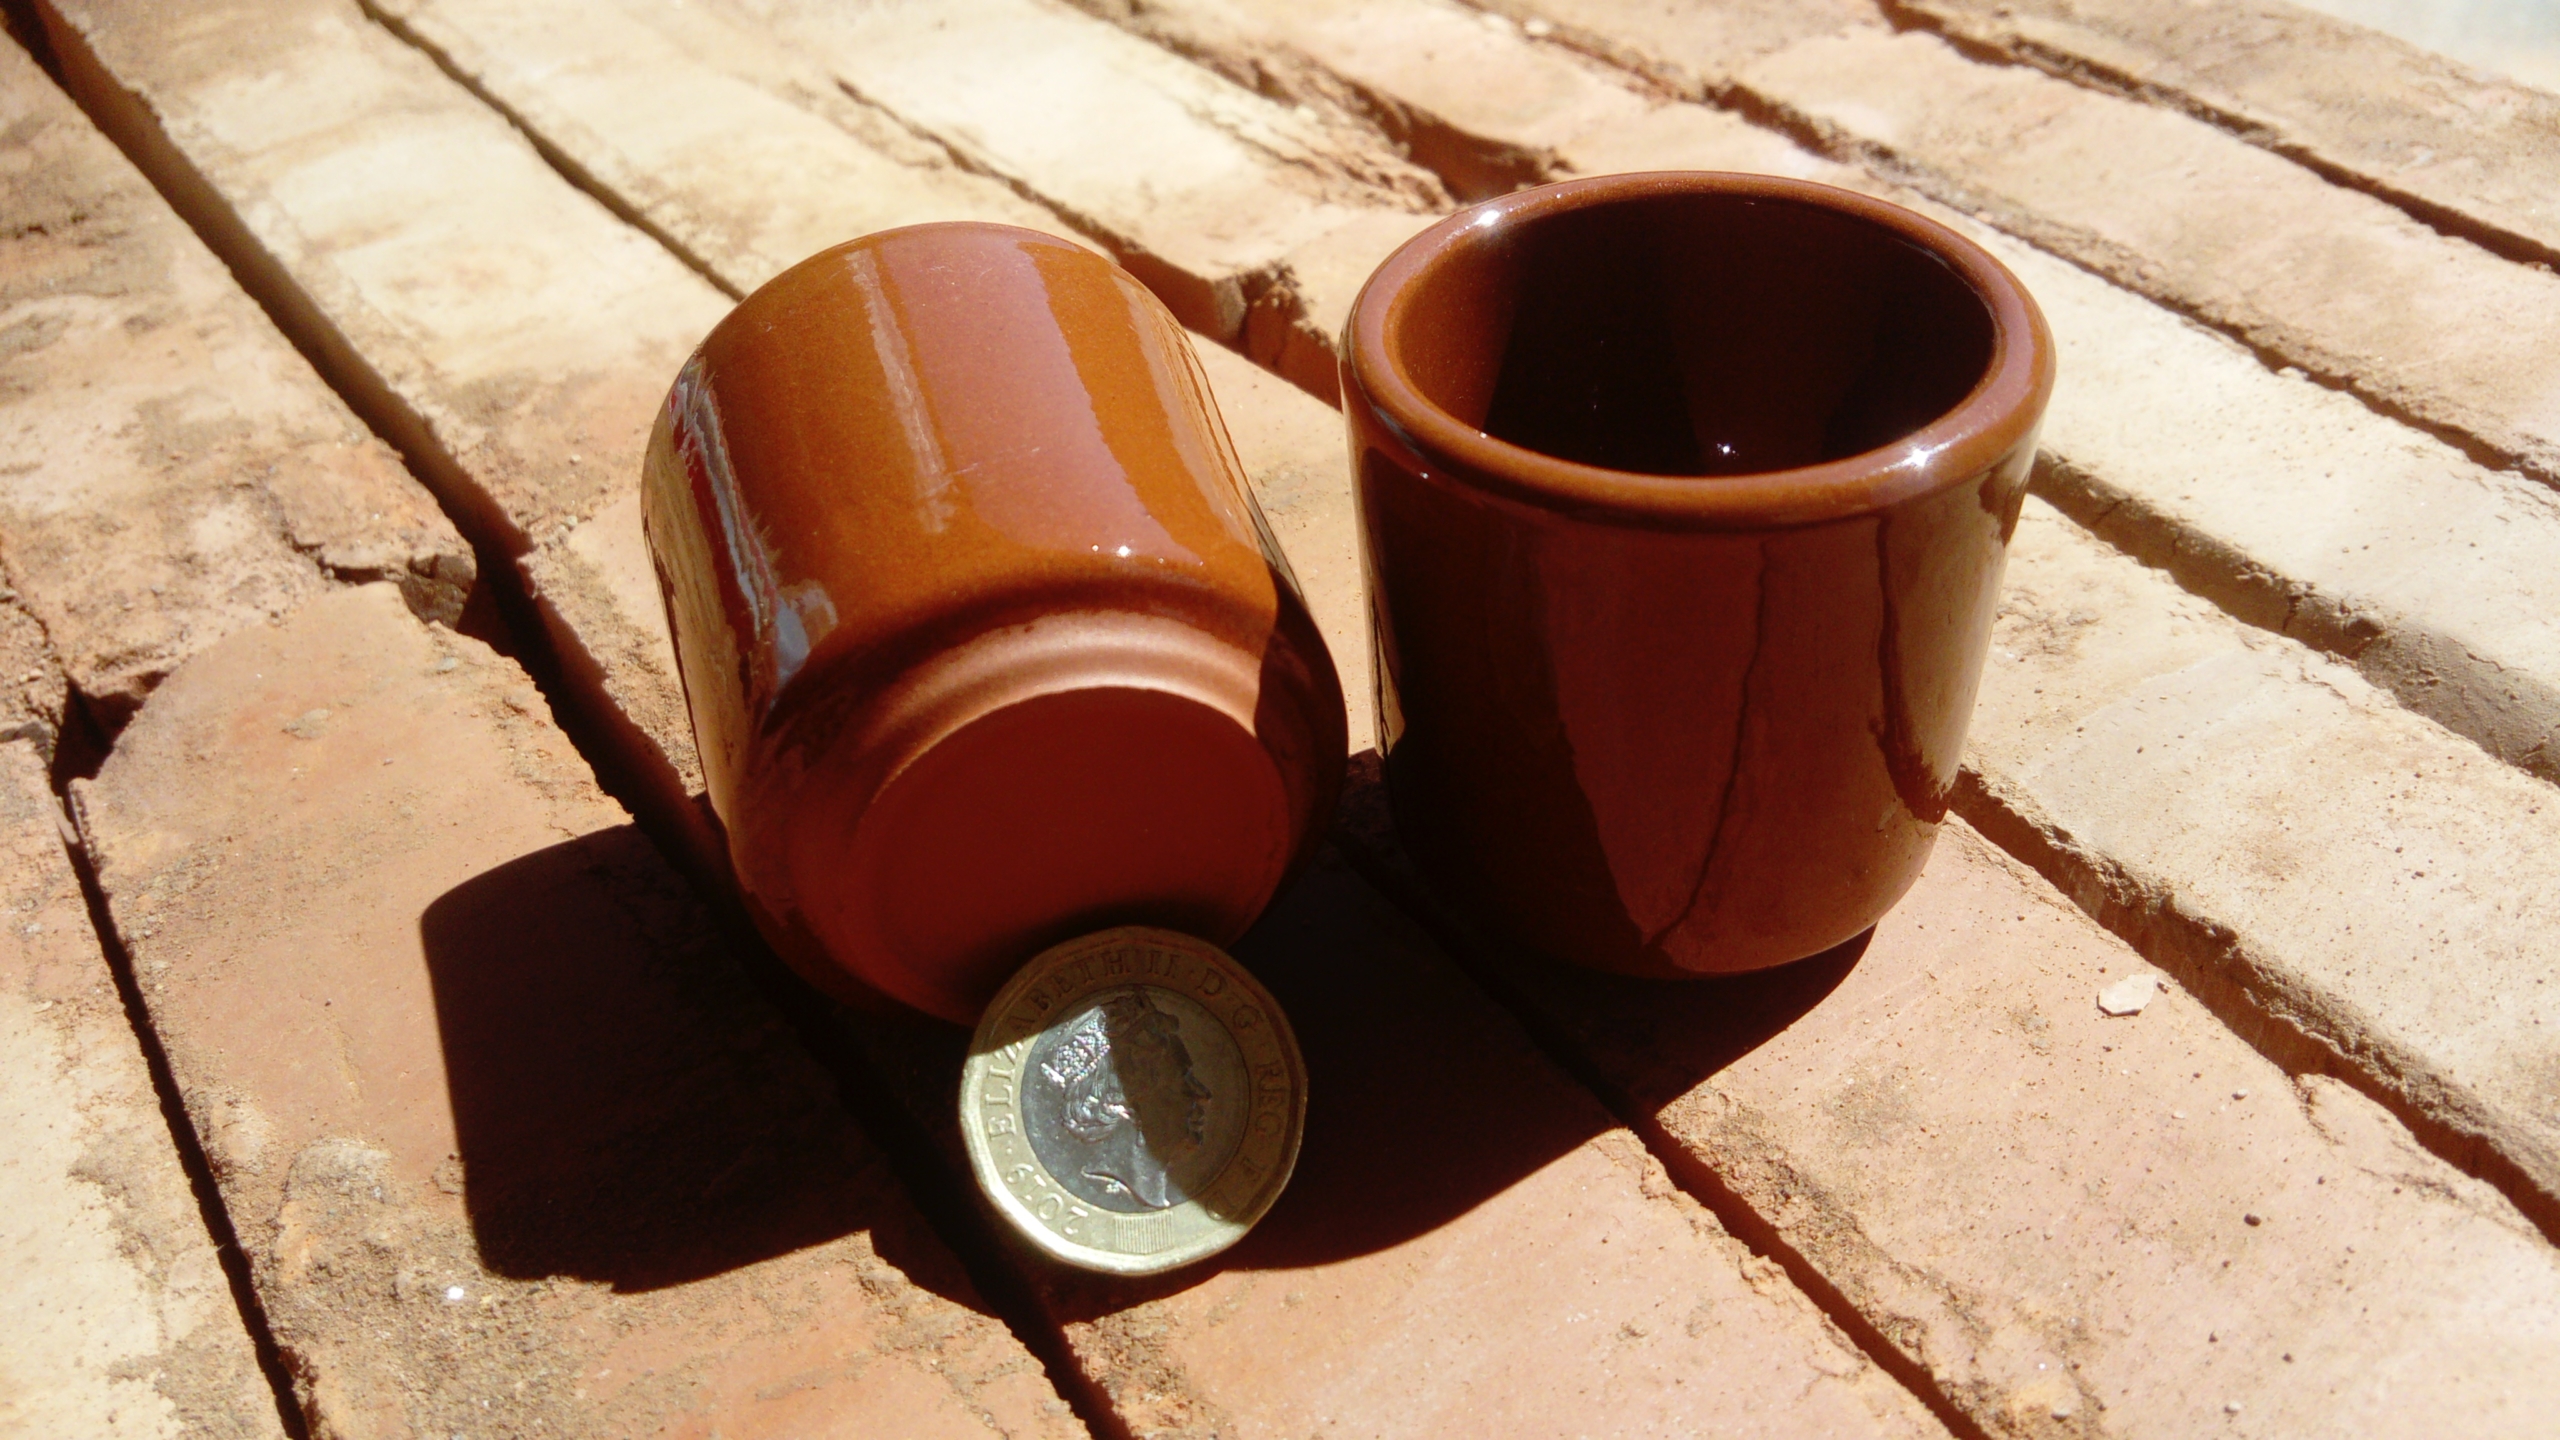 Small Spanish glazed cups